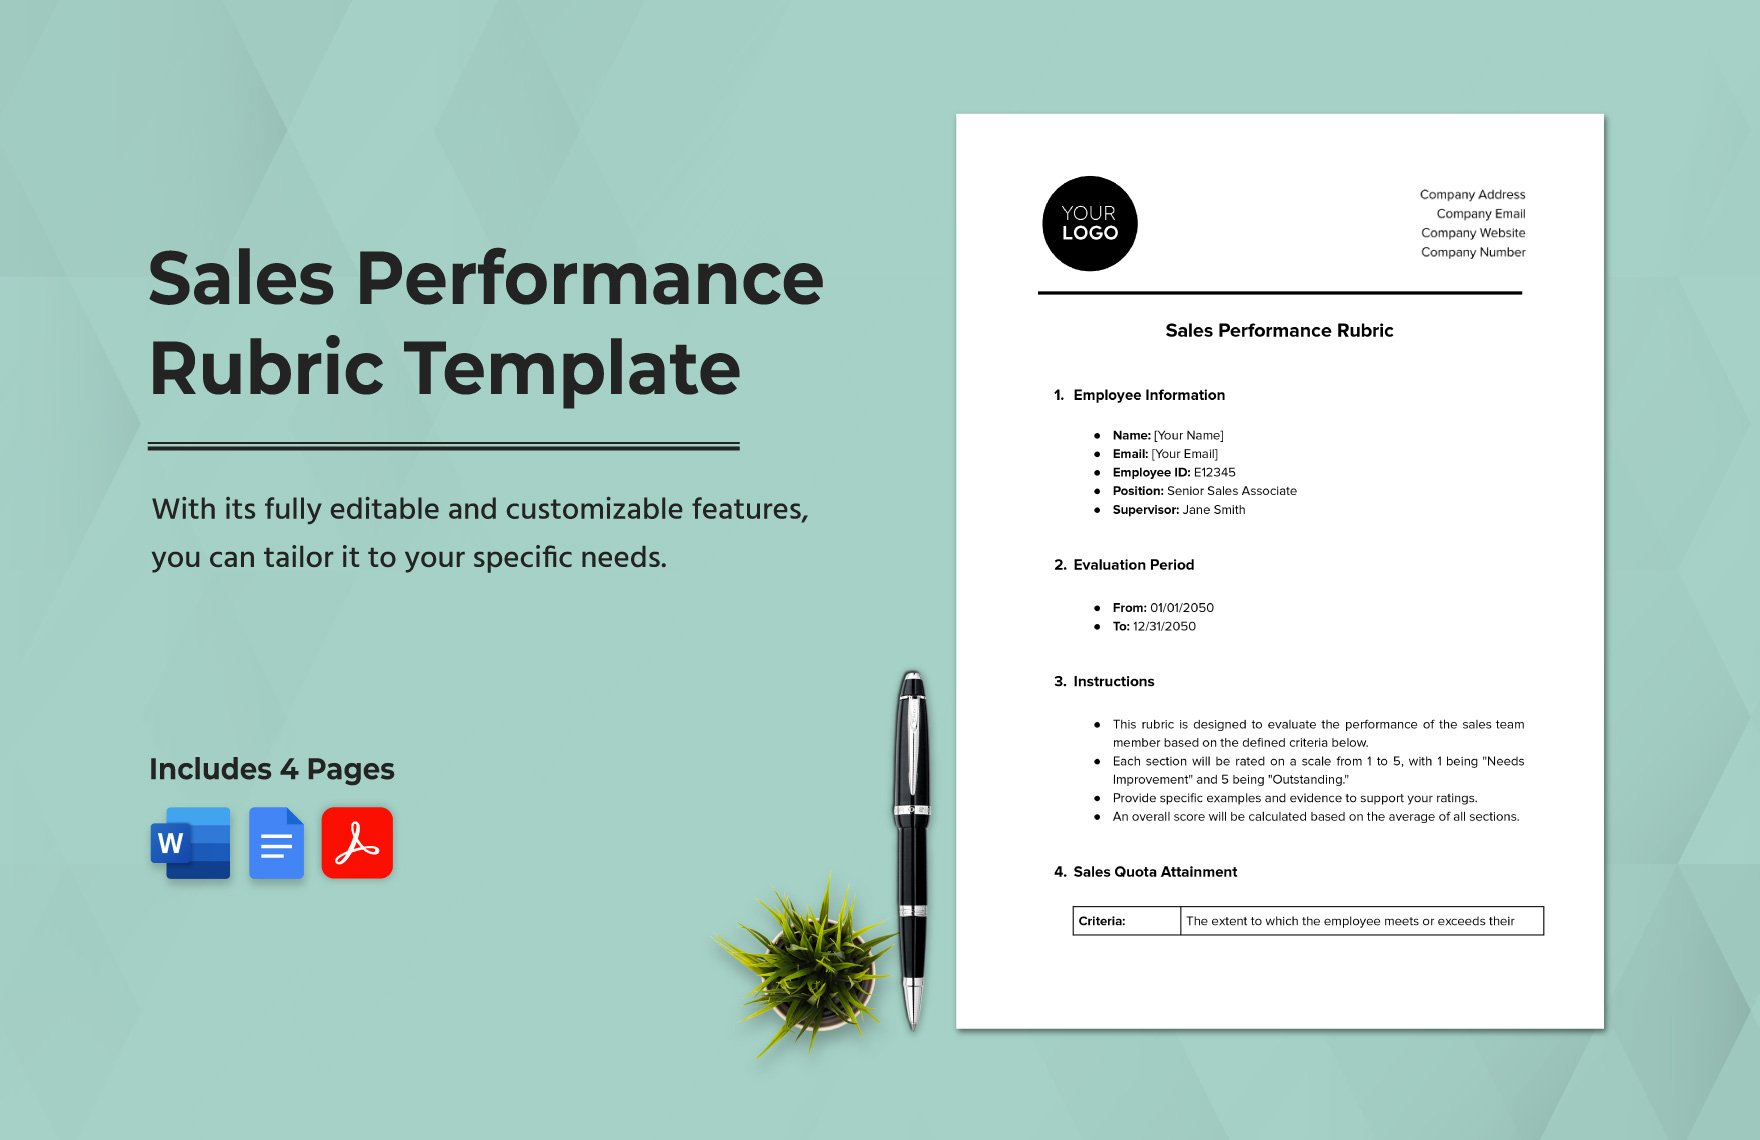 Sales Performance Rubric Template in Word, Google Docs, PDF